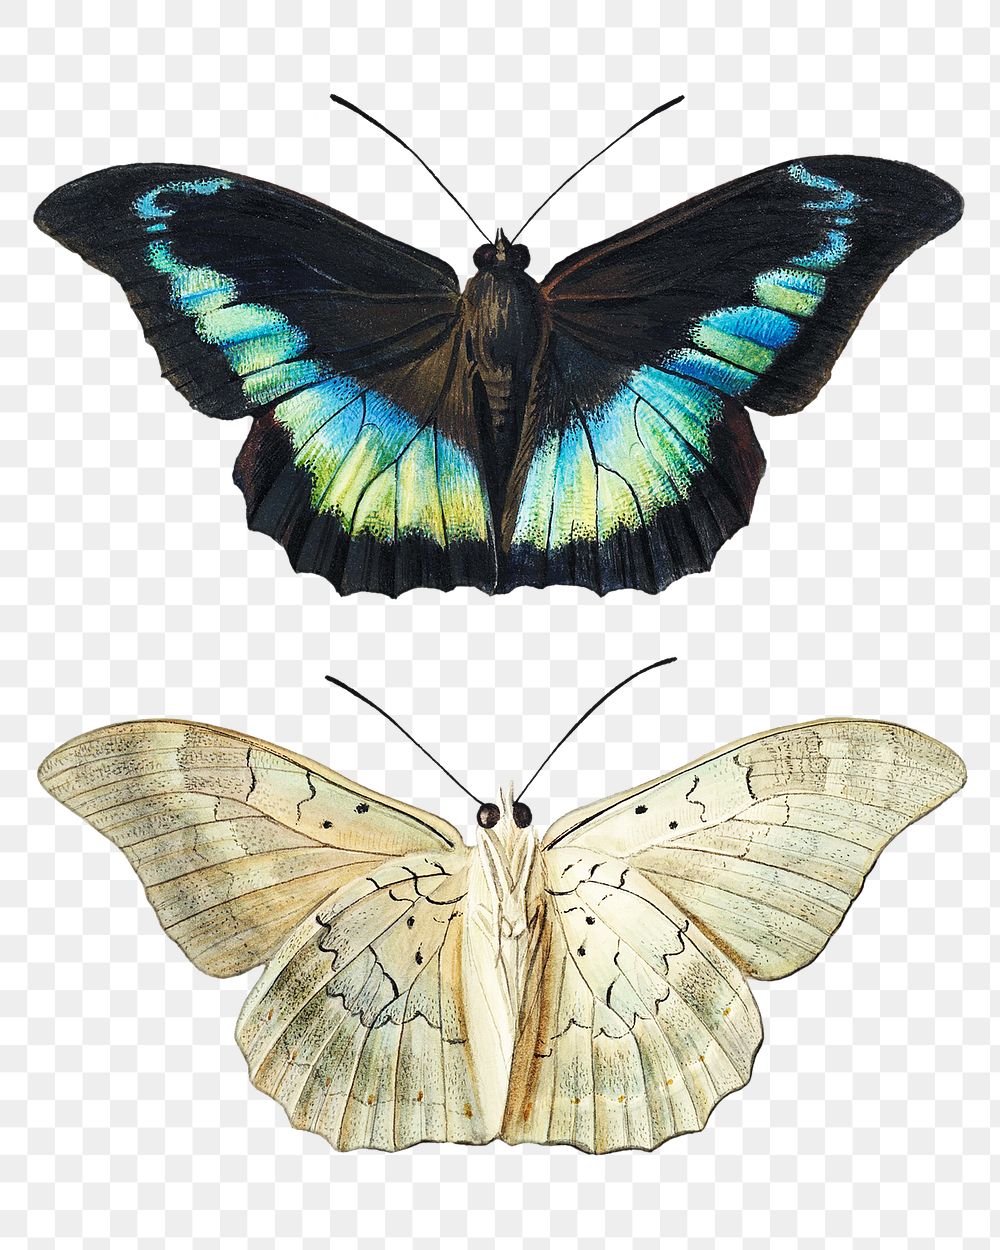 Vintage butterfly design element